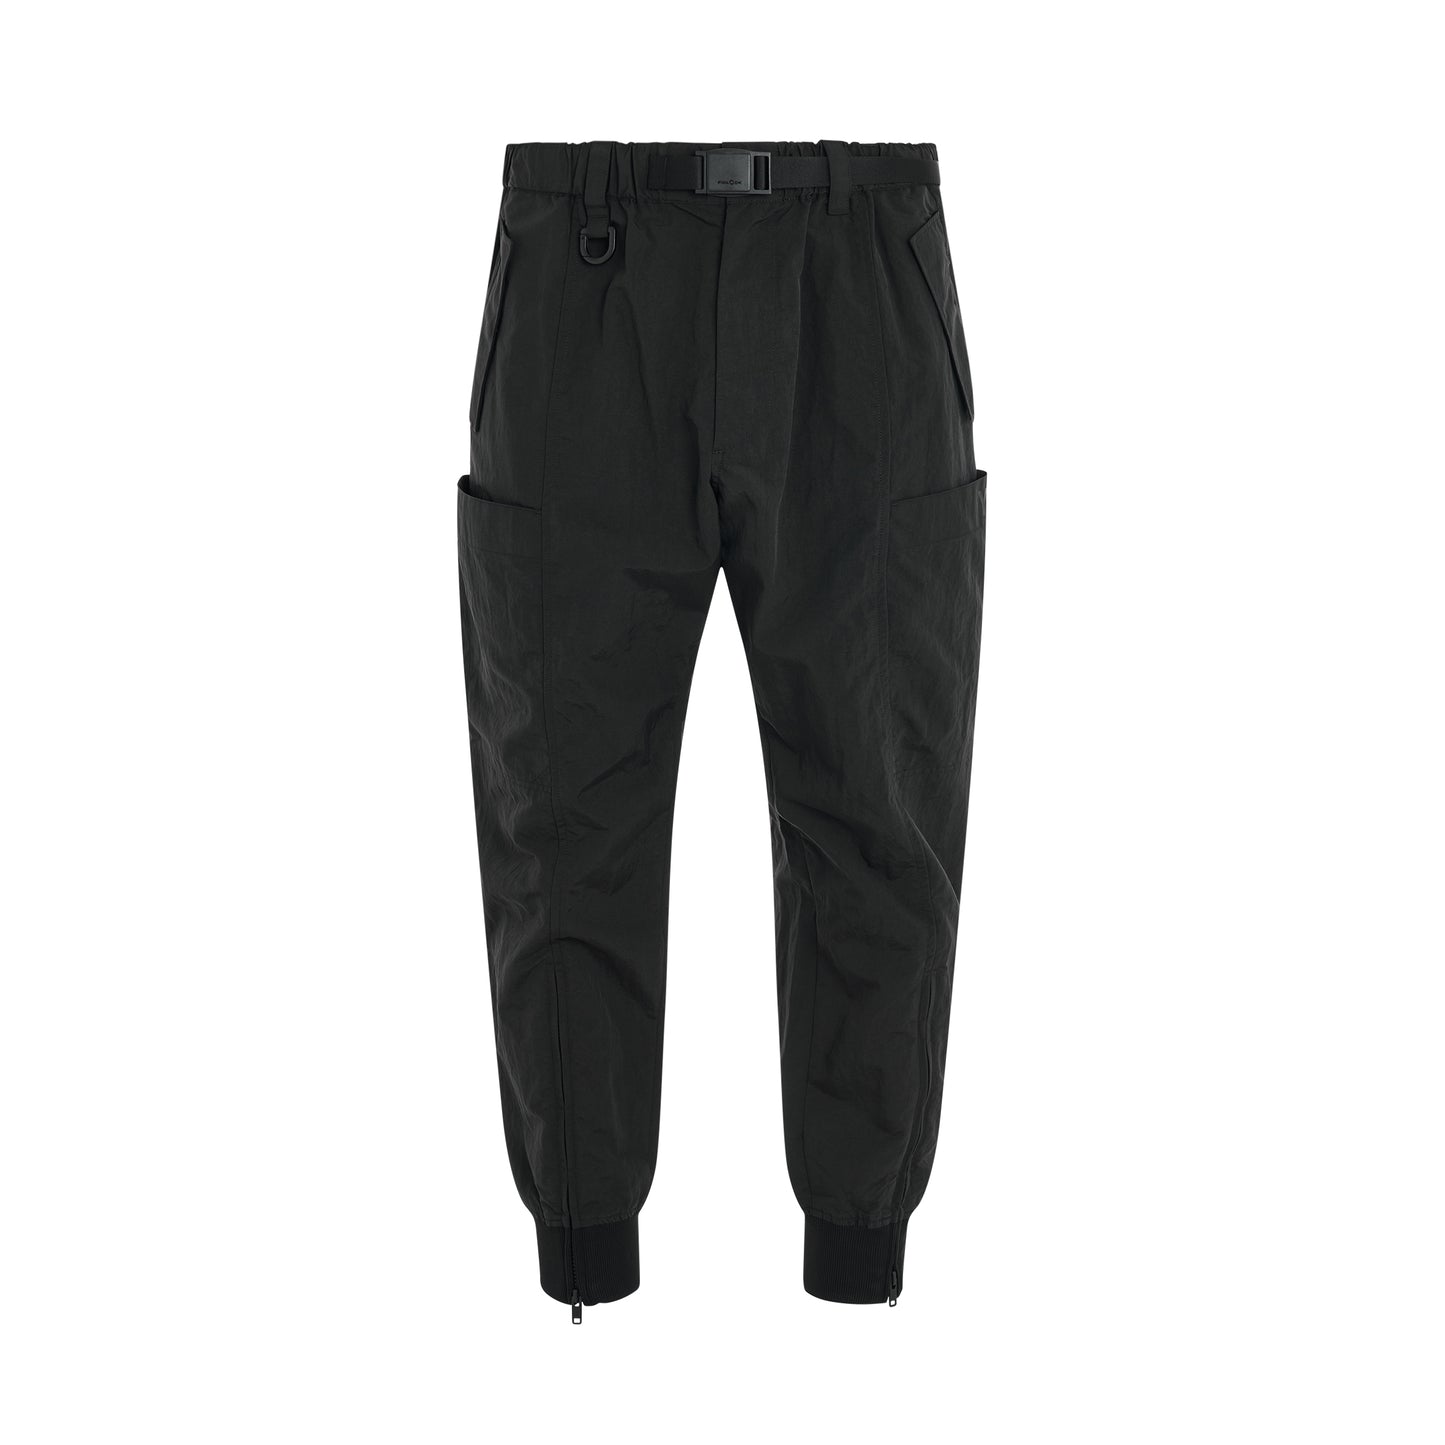 Crinkle Nylong Cuff Pants in Black